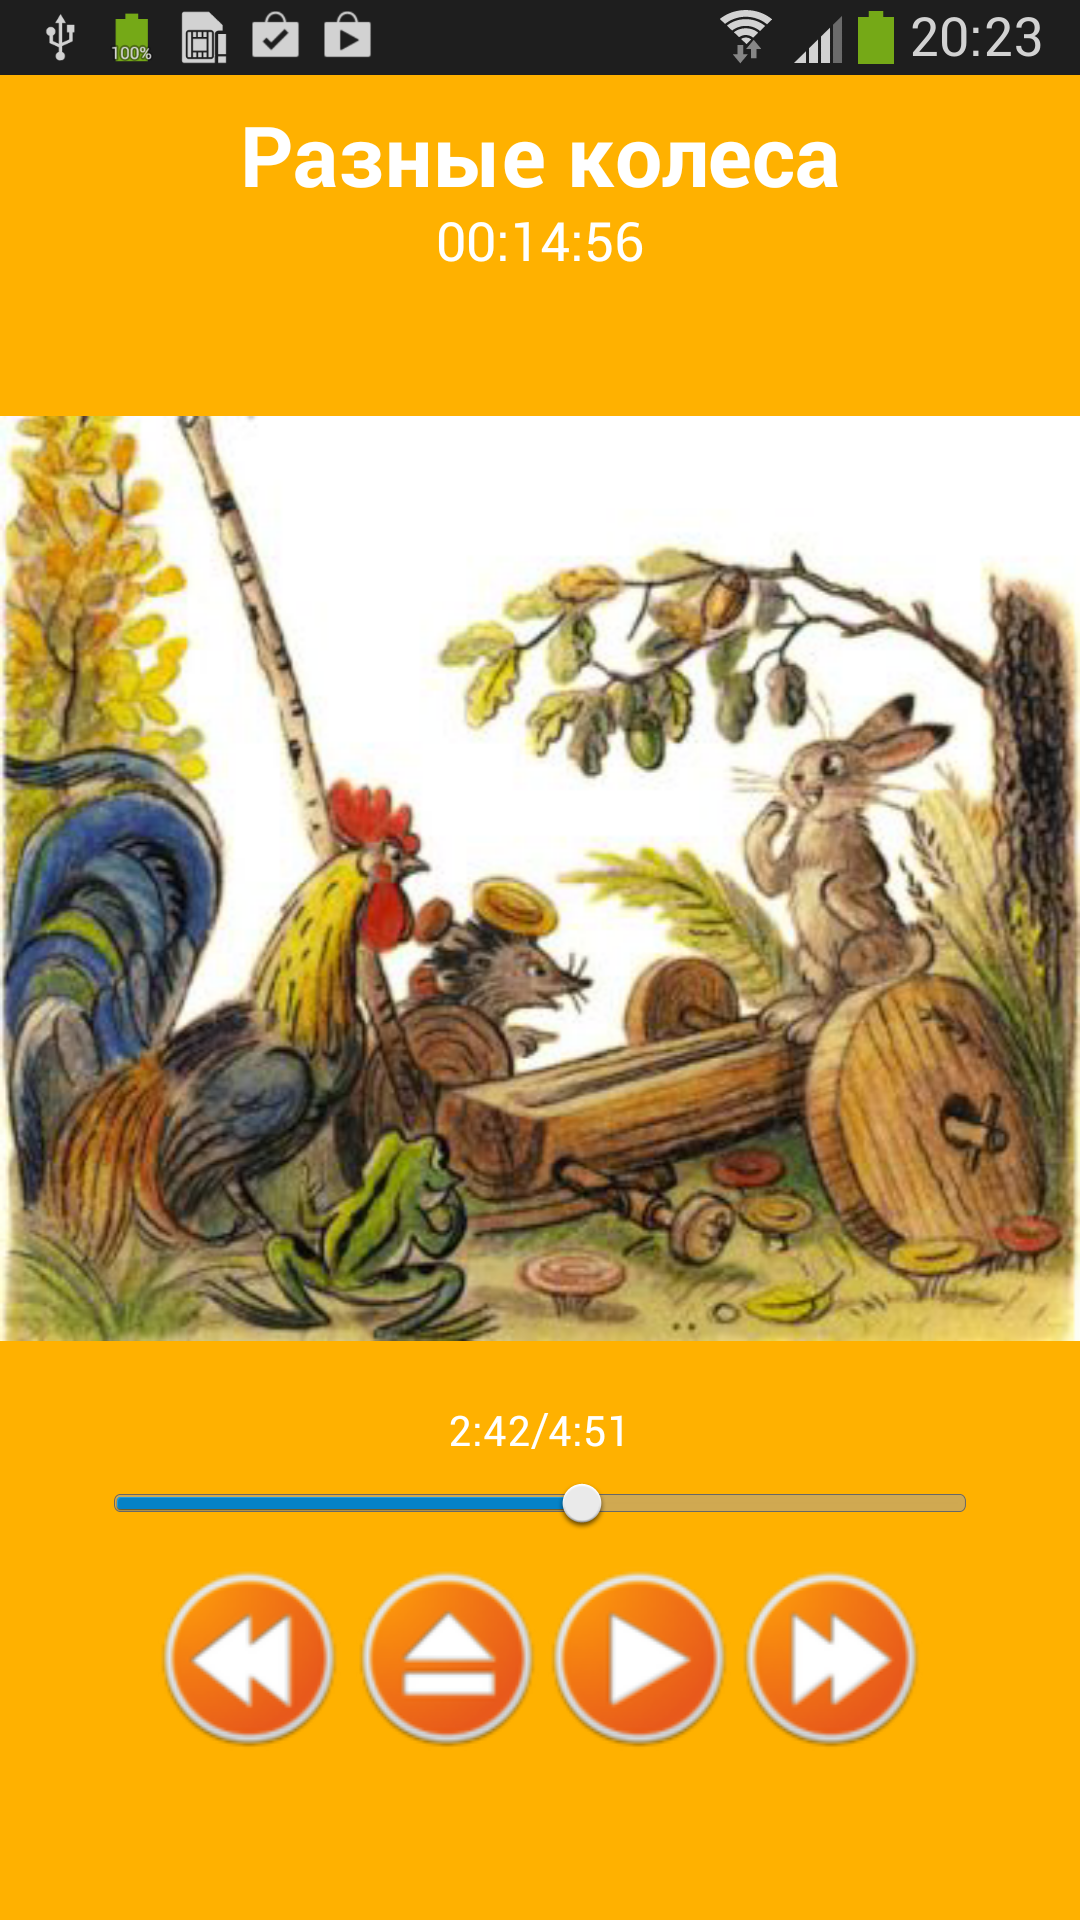 Android application Аудио сказки Сутеева для детей screenshort